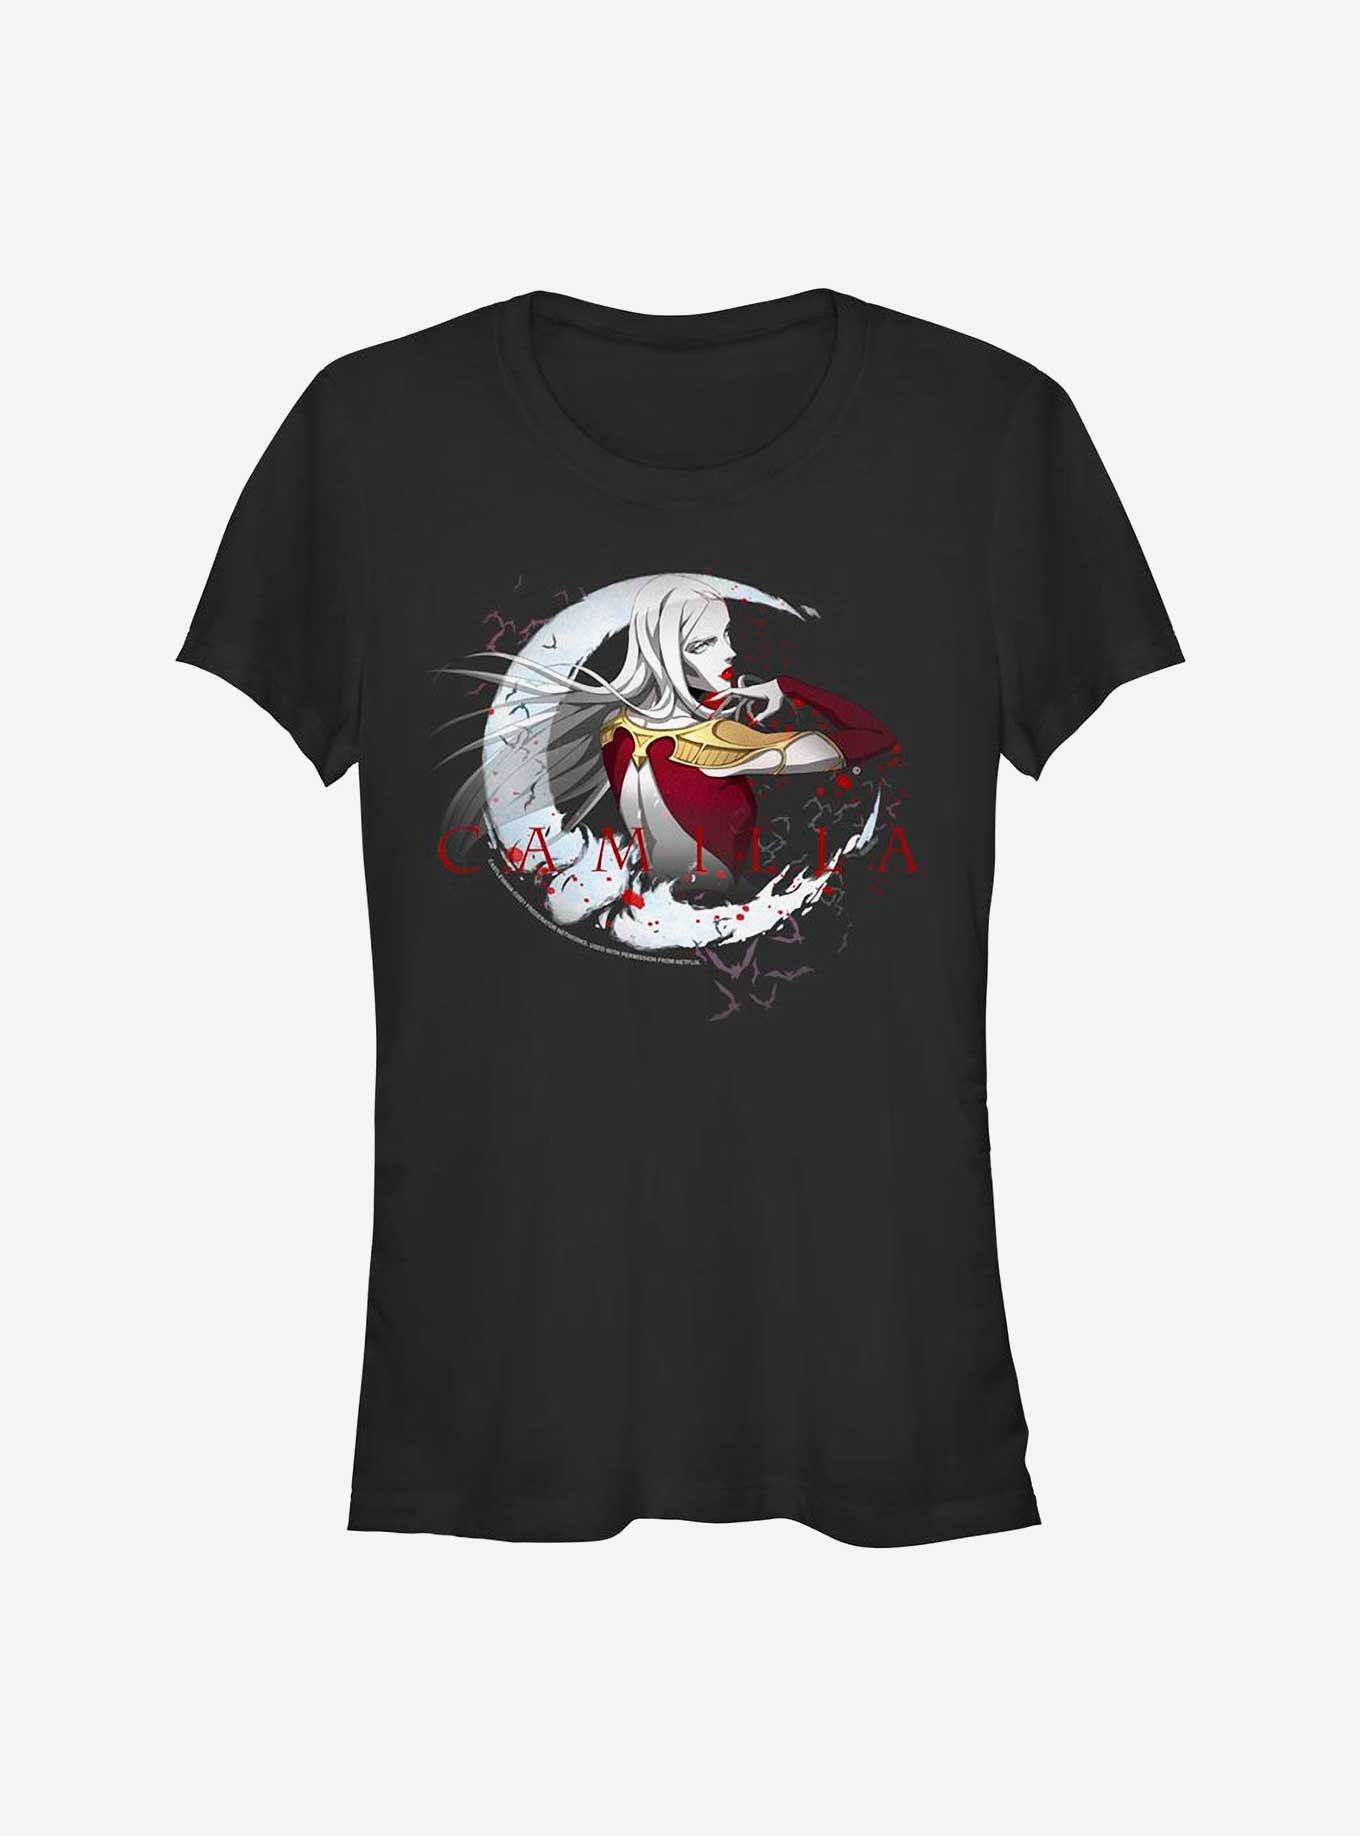 Castlevania Camilla Girls T-Shirt